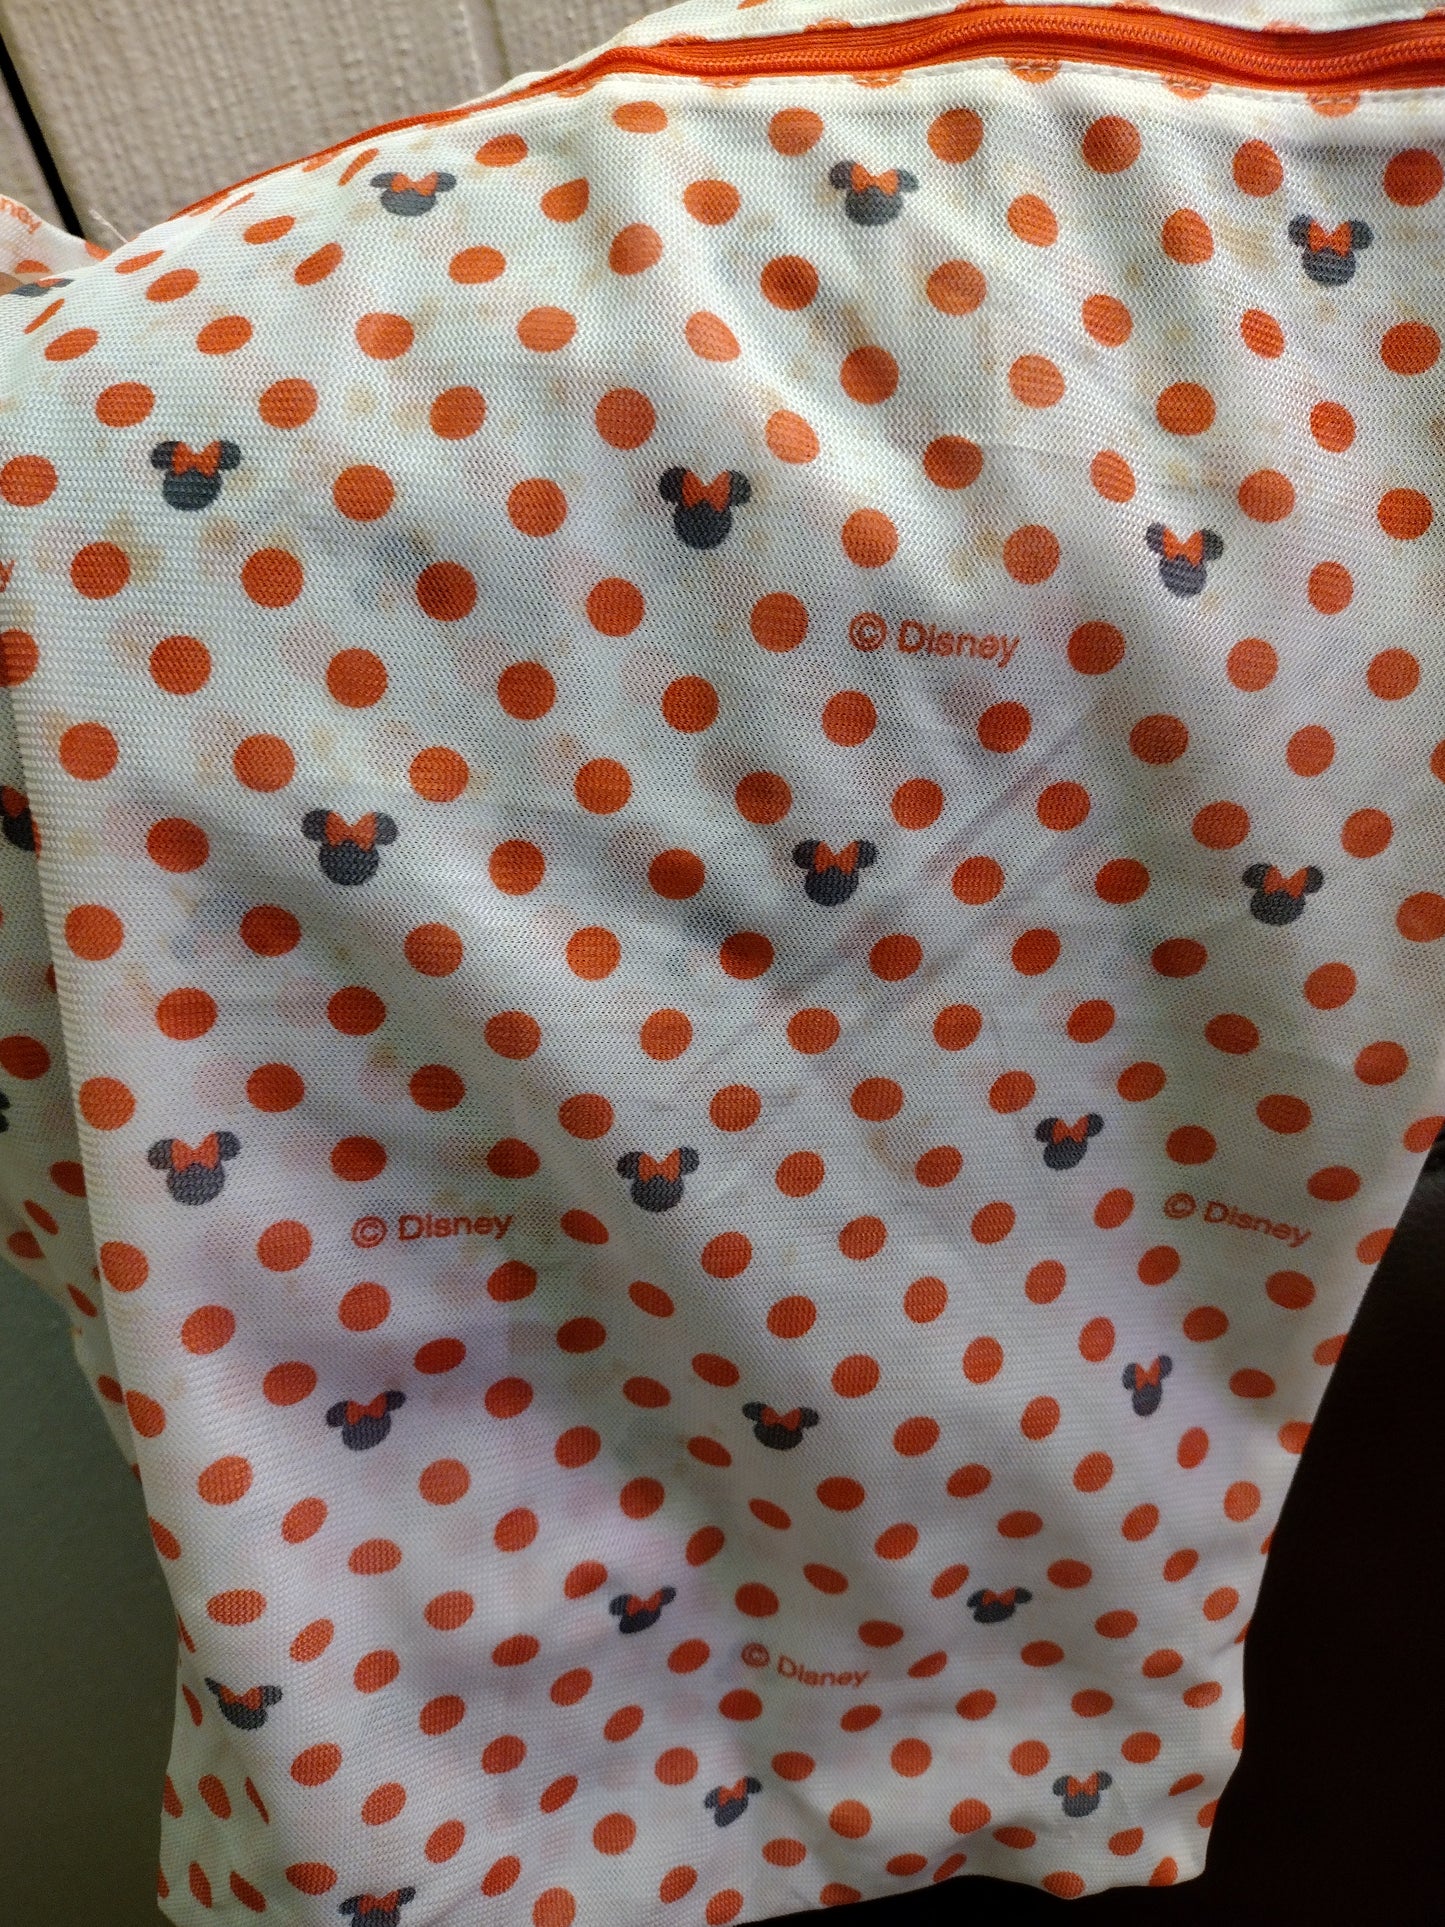 Daiso Minnie Mouse Laundry Net Bag - 21.7" x 17.7"